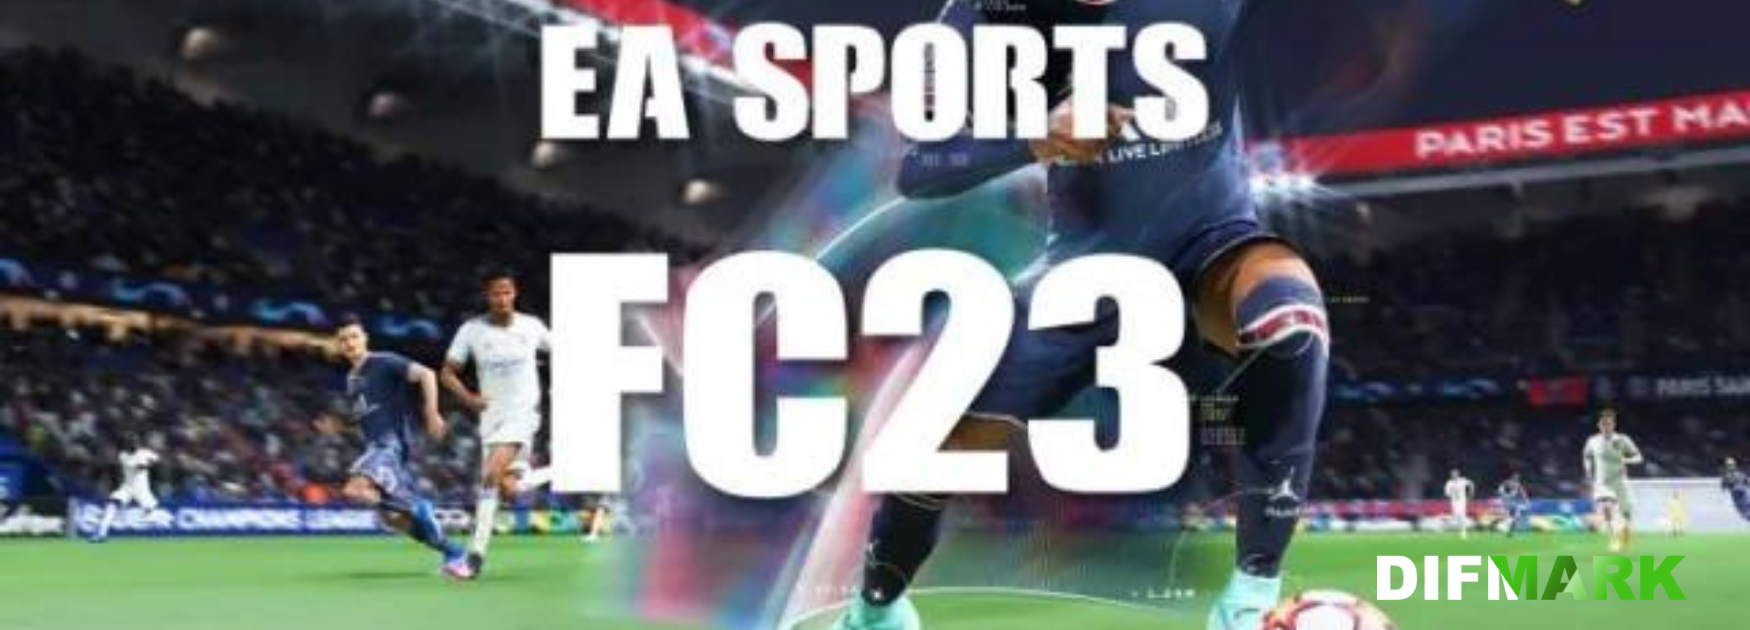 EA made a decision to rebrand FIFA to EA Sports Football Club